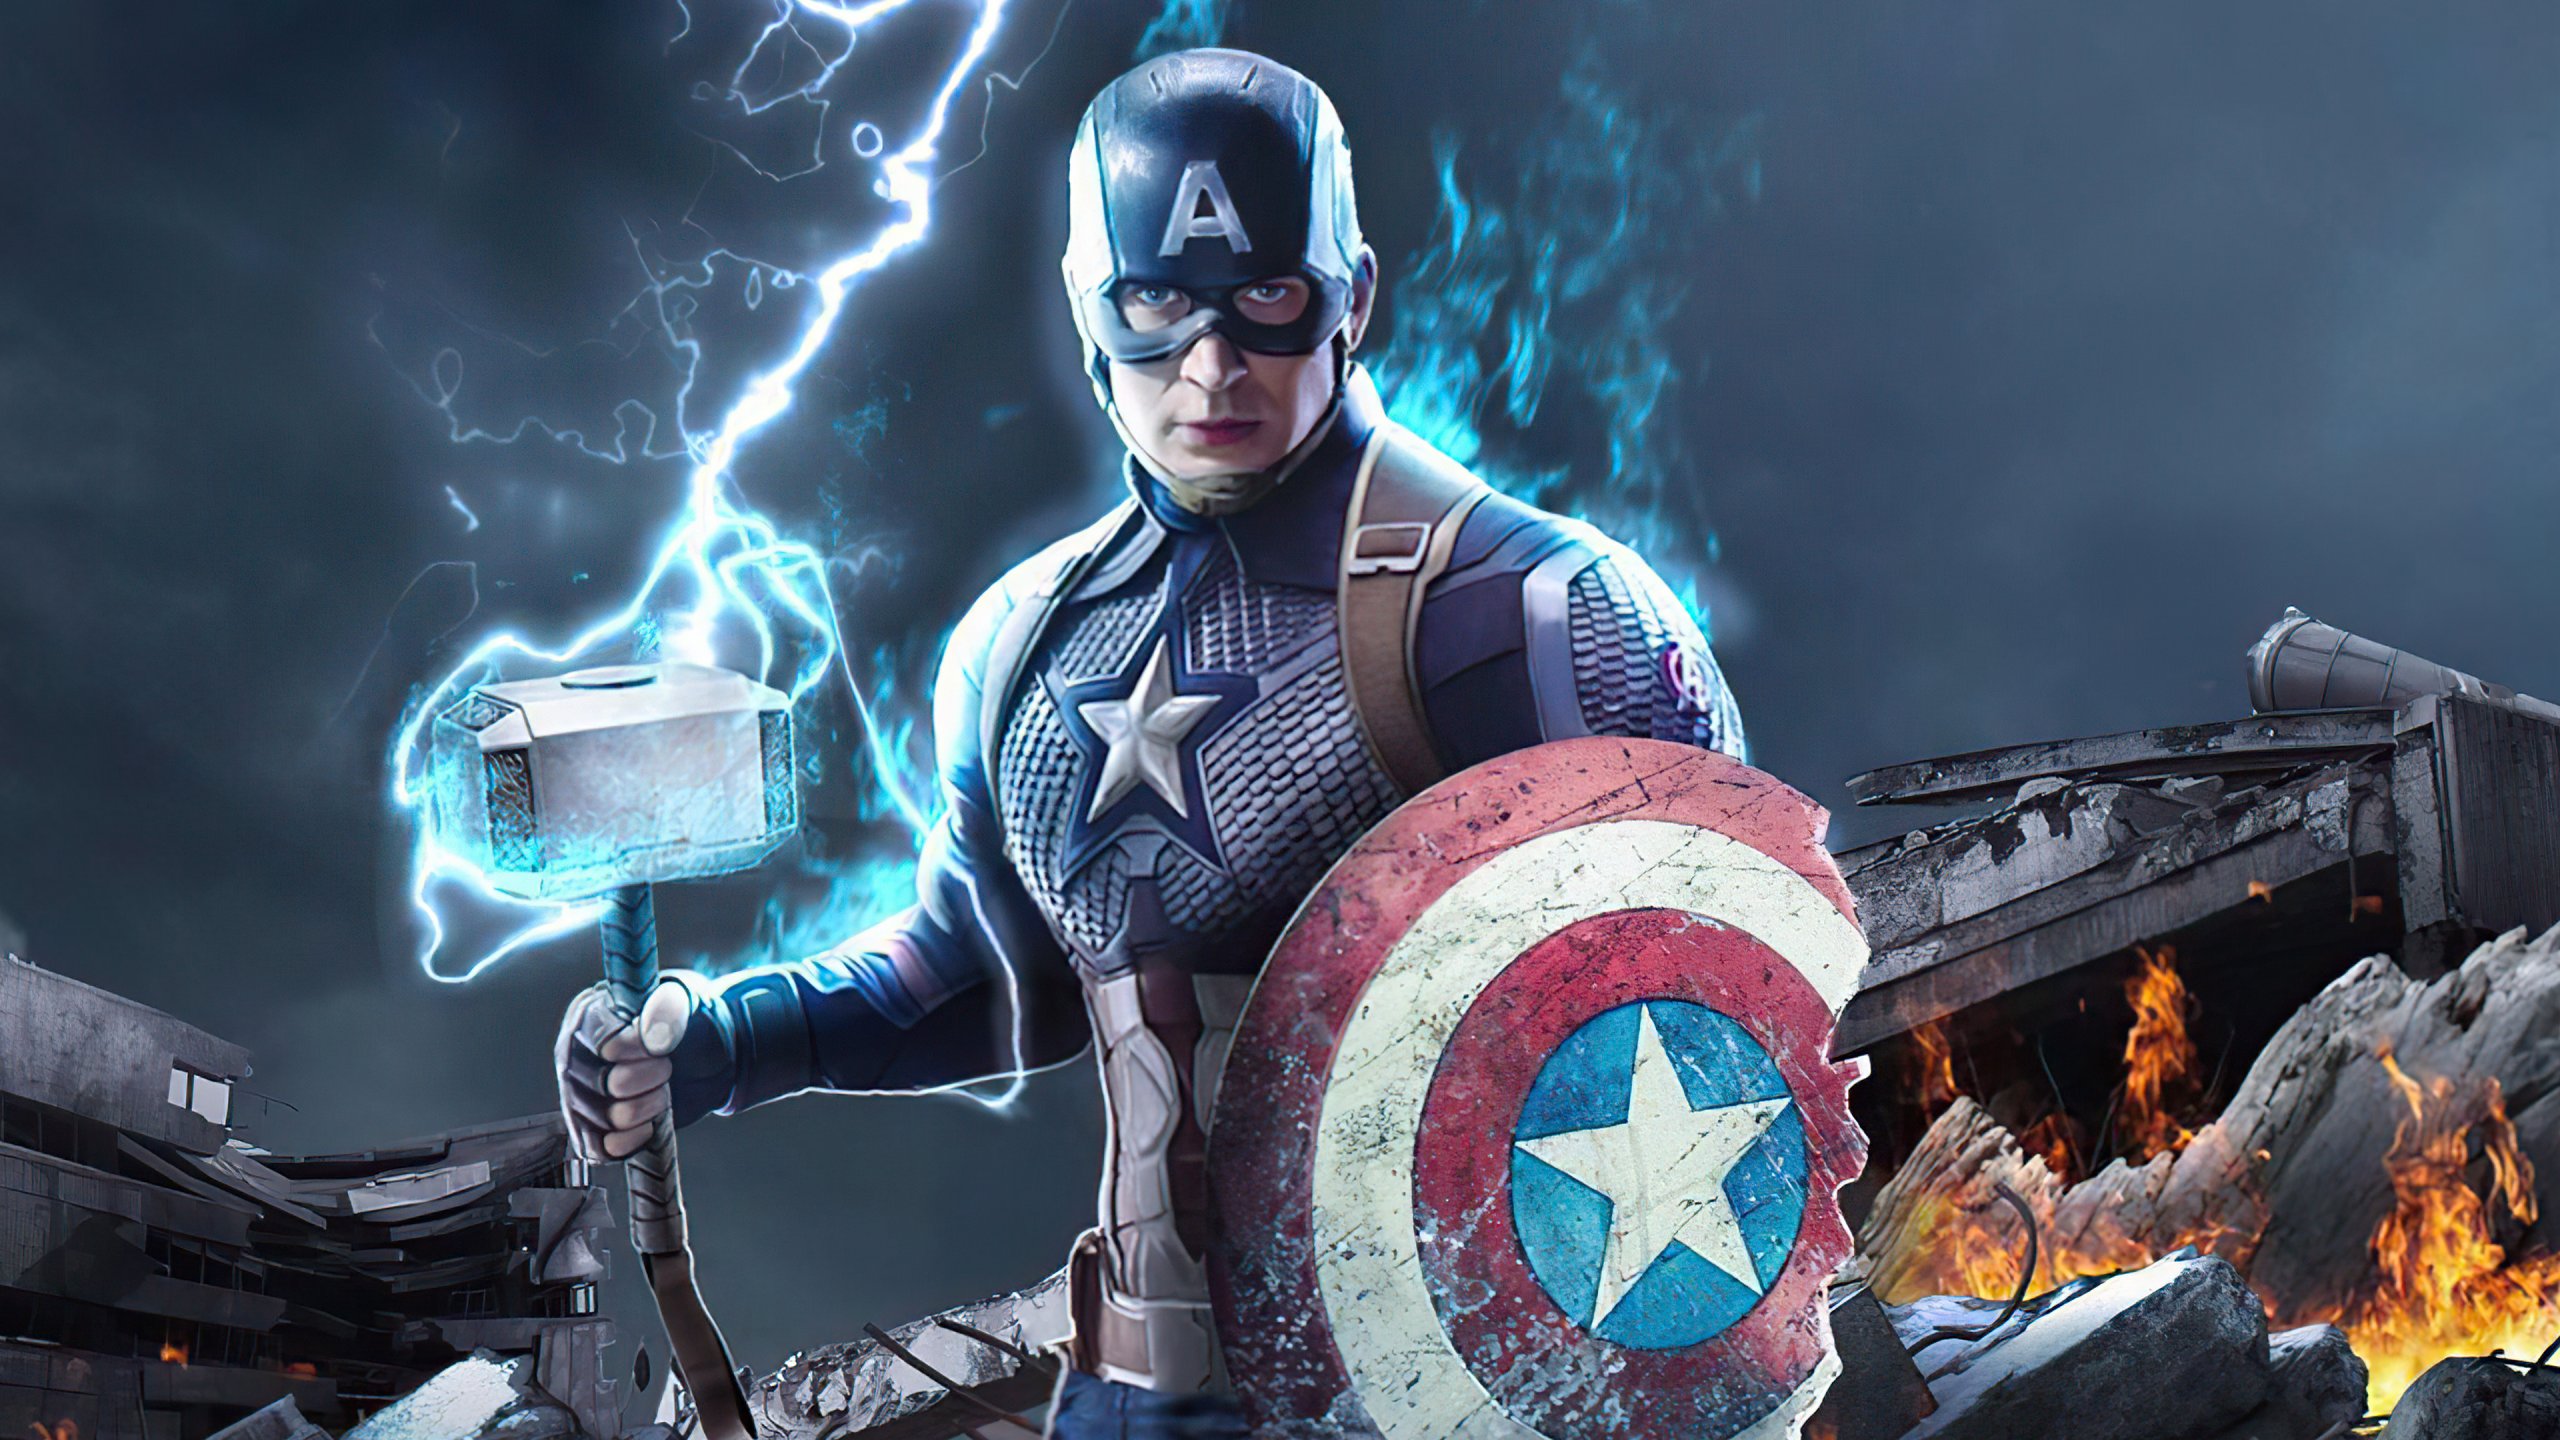 Captain America with broken shield Wallpaper 4k Ultra HD ID:7532